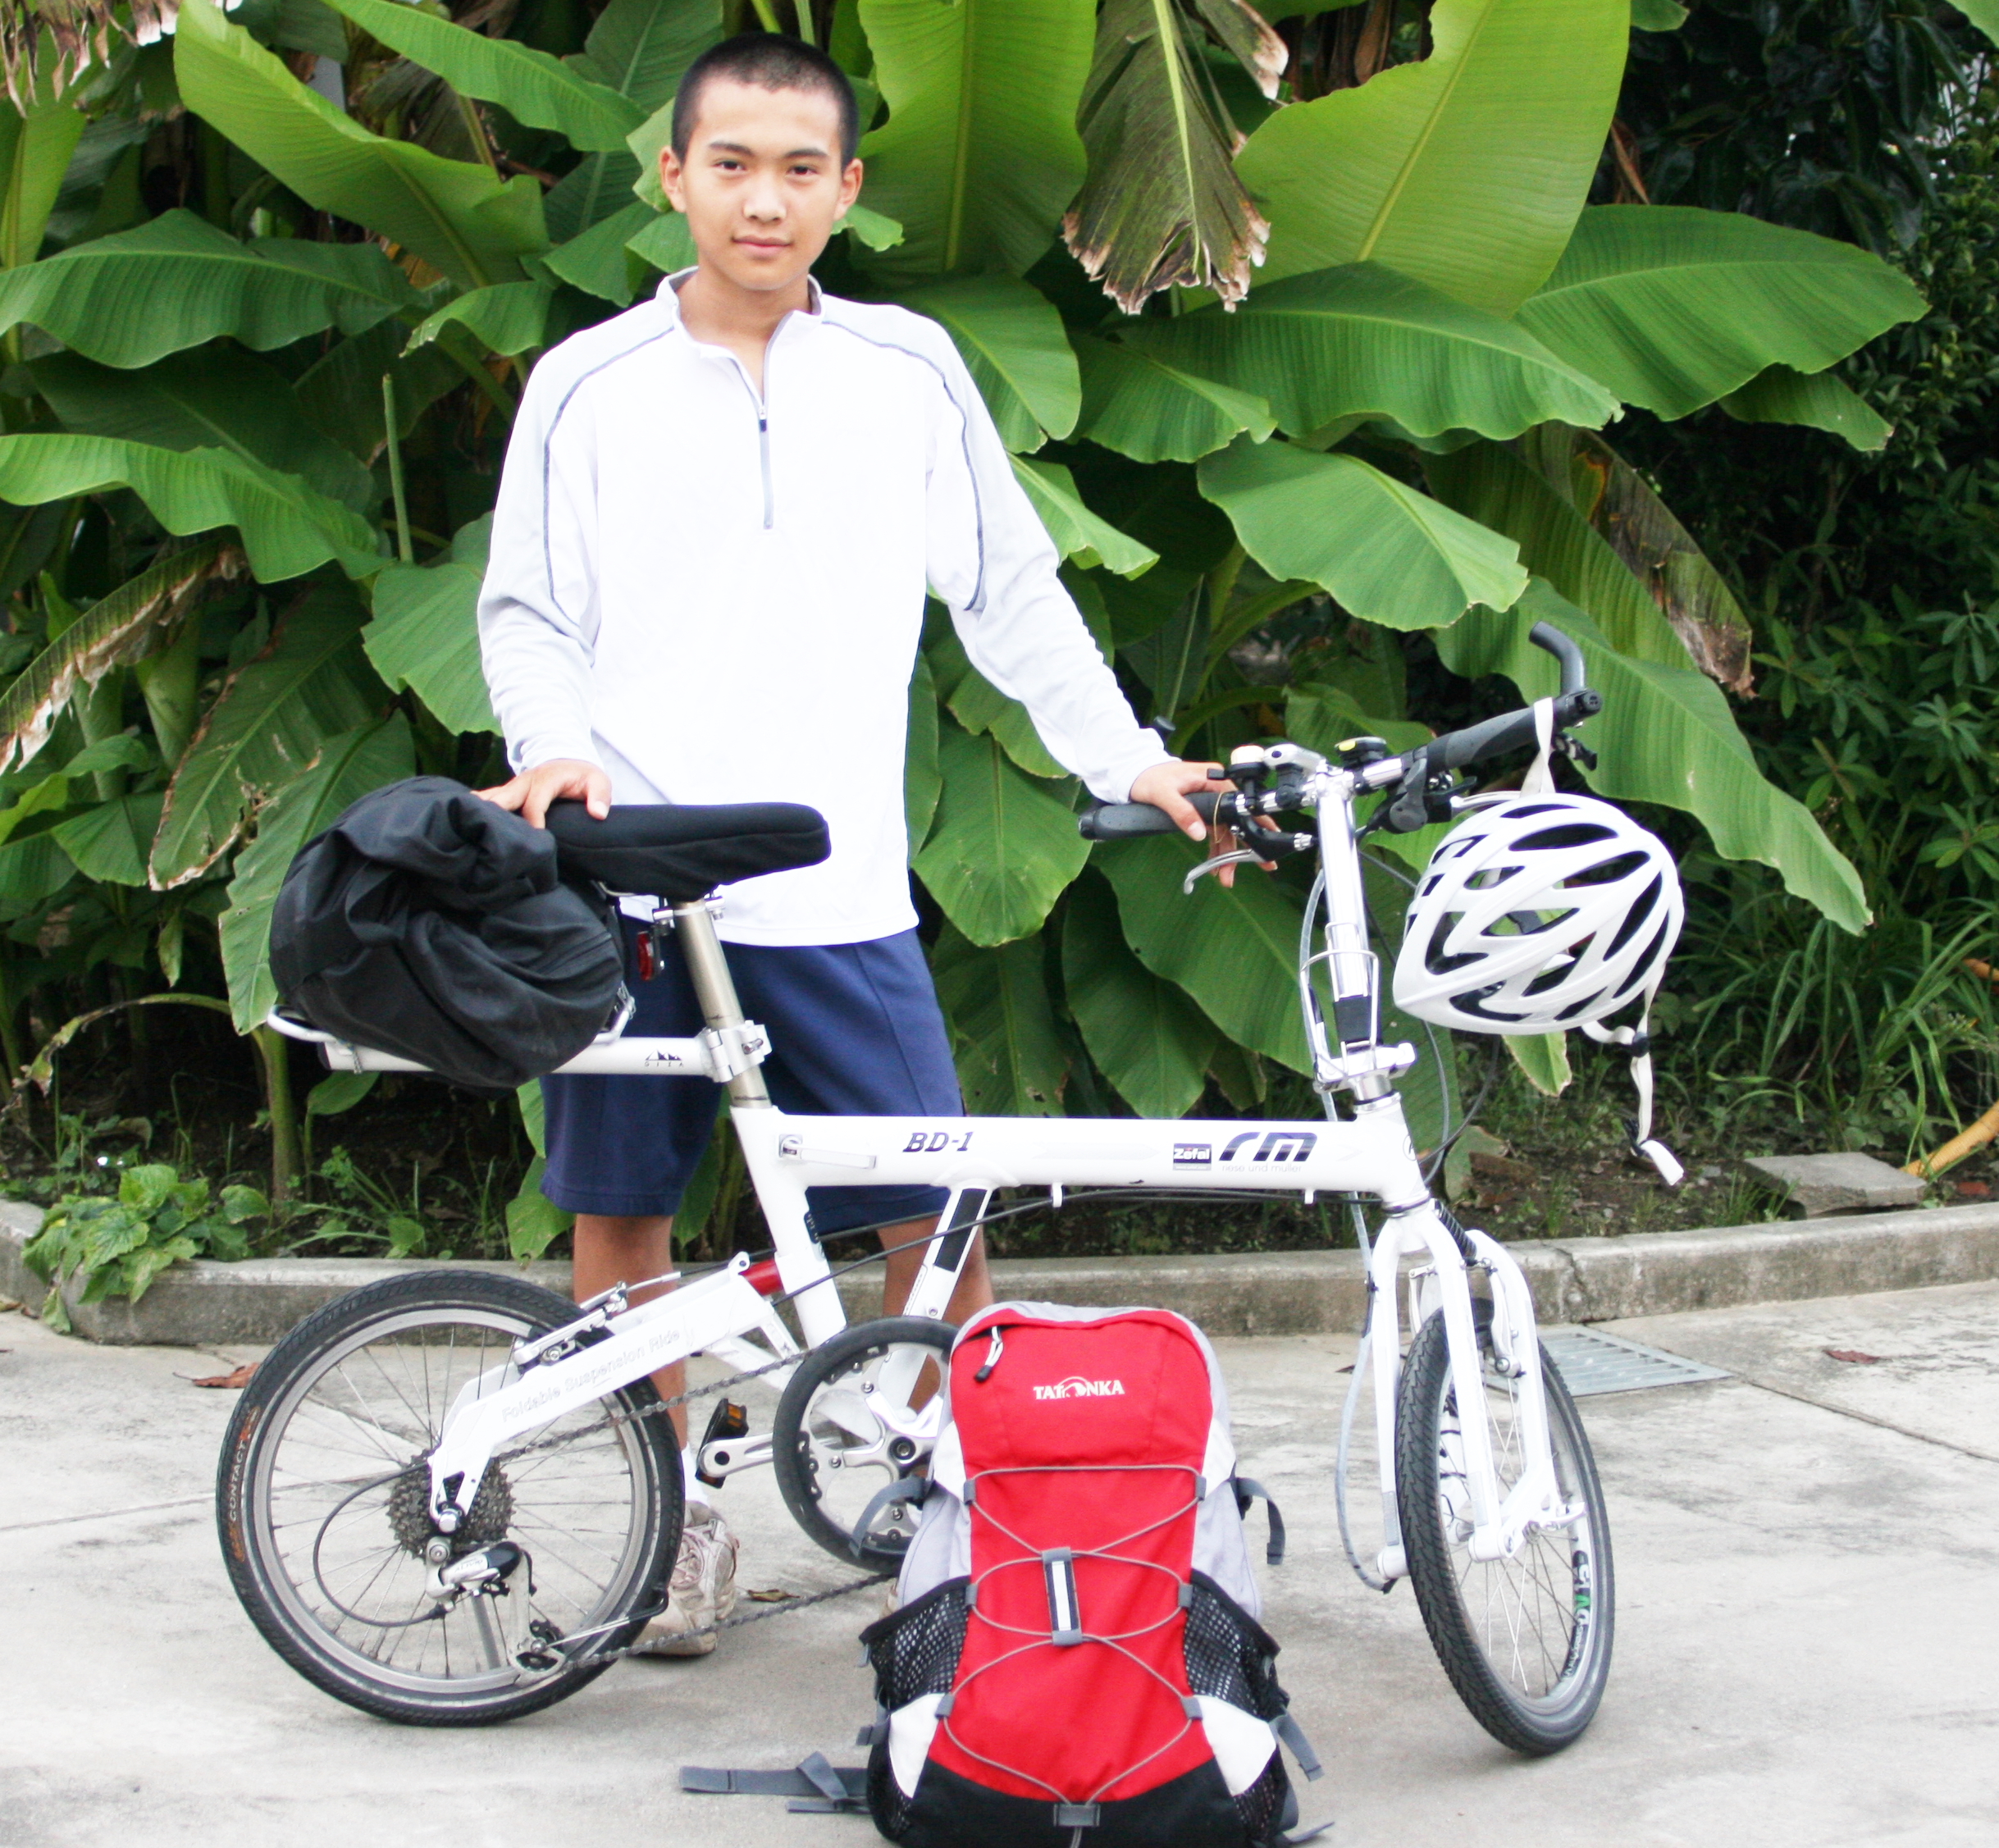 2008自転車の旅報告書用 (1)2